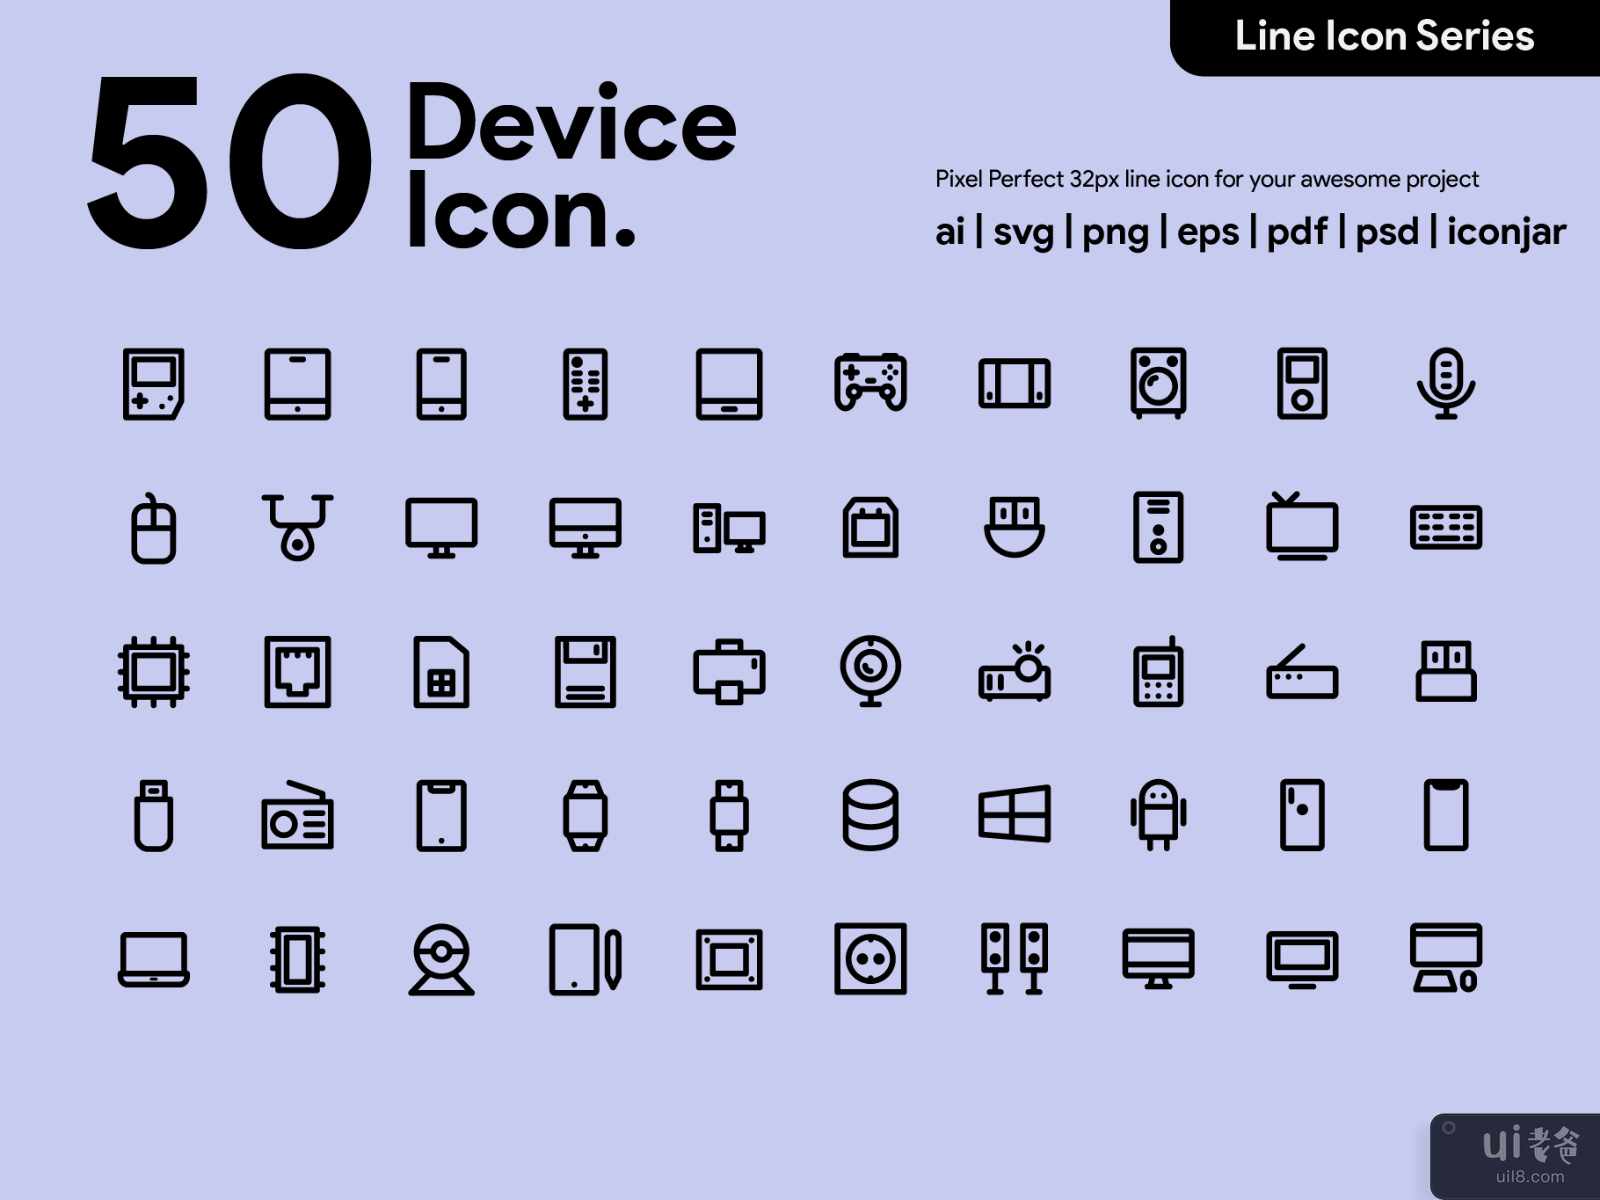 Kawaicon - 50 Device Line icon